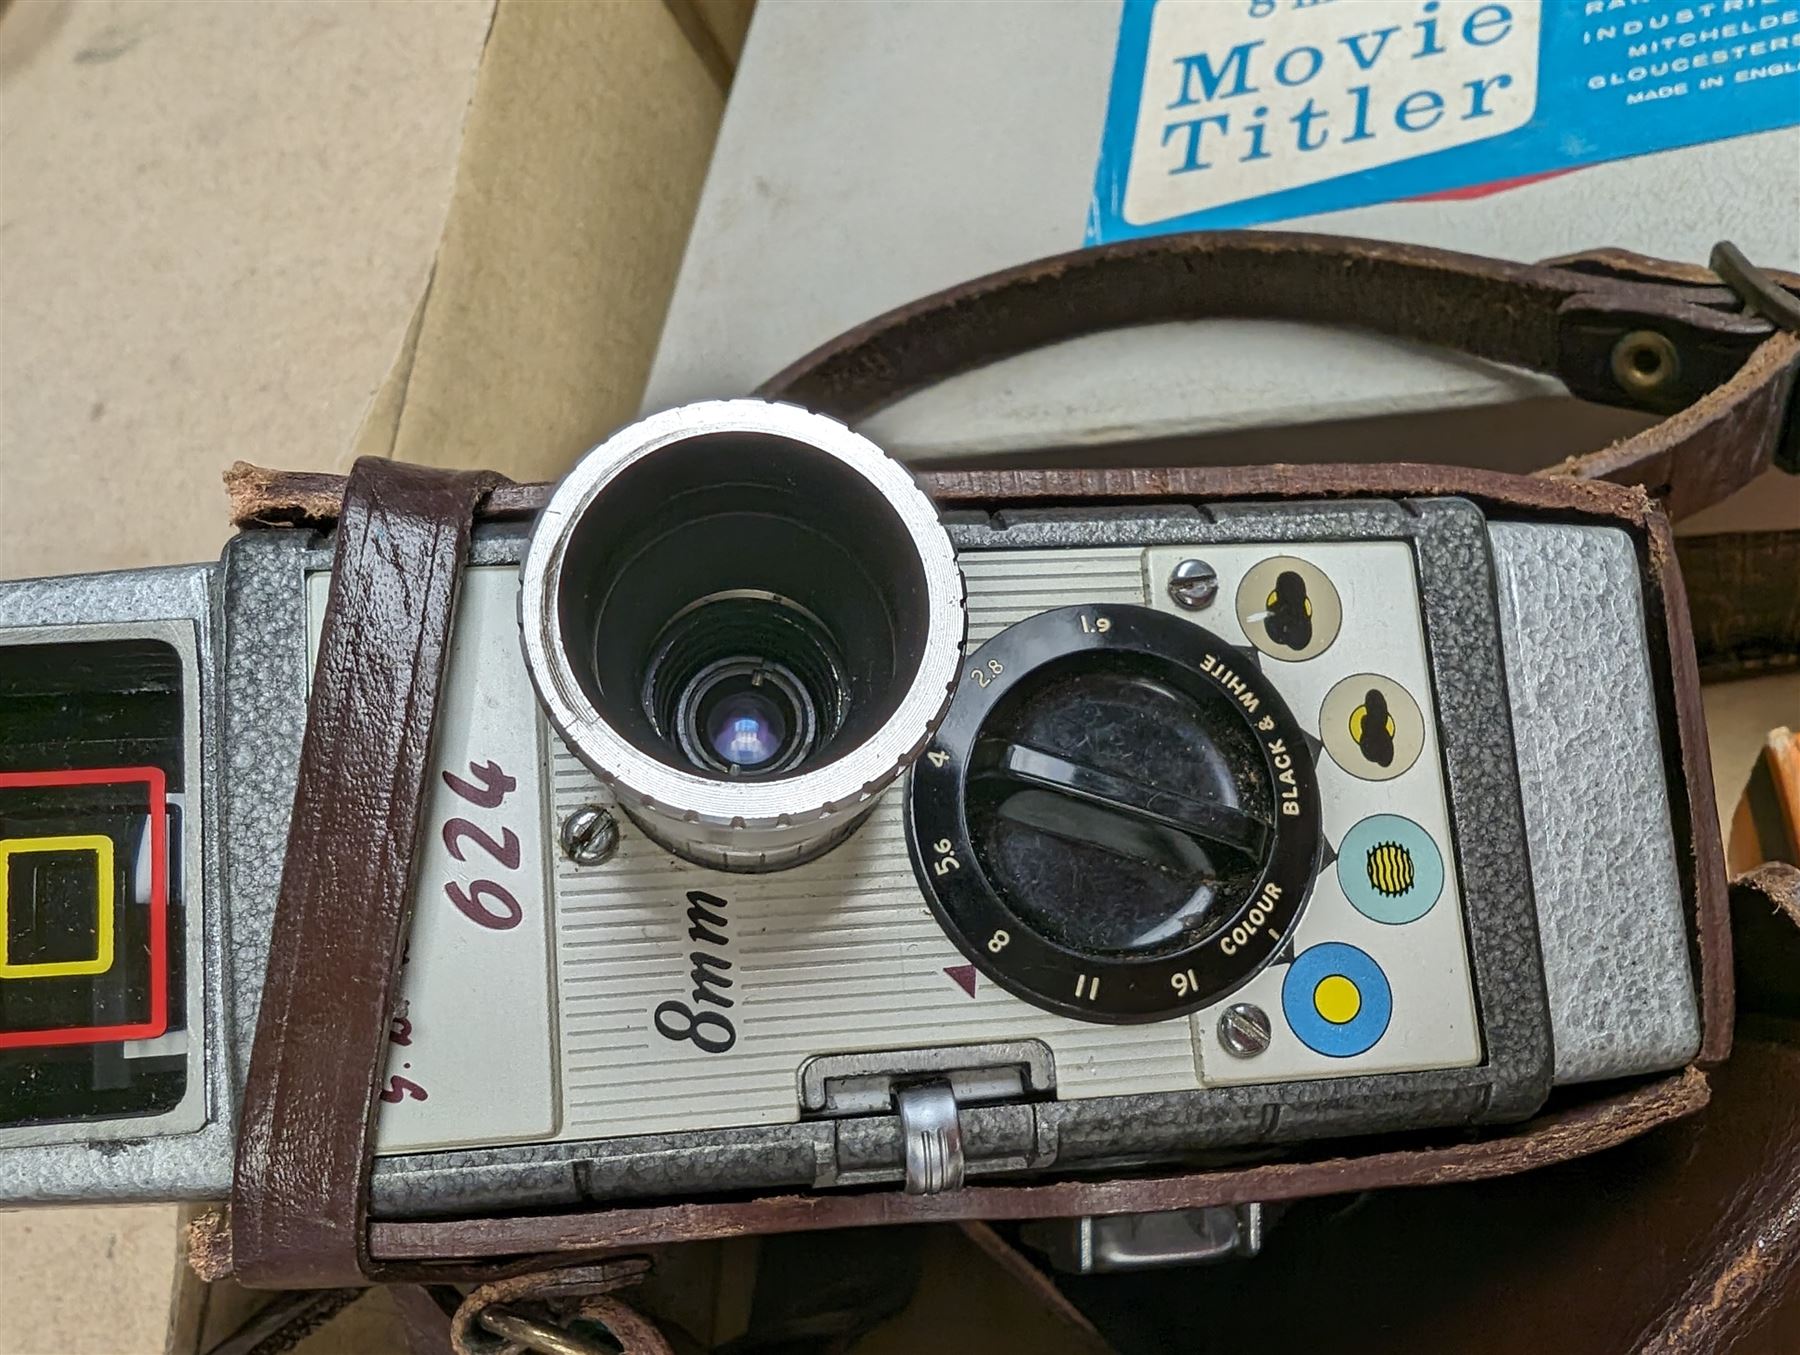 Bell & Howell cine camera model 624 - Image 2 of 4